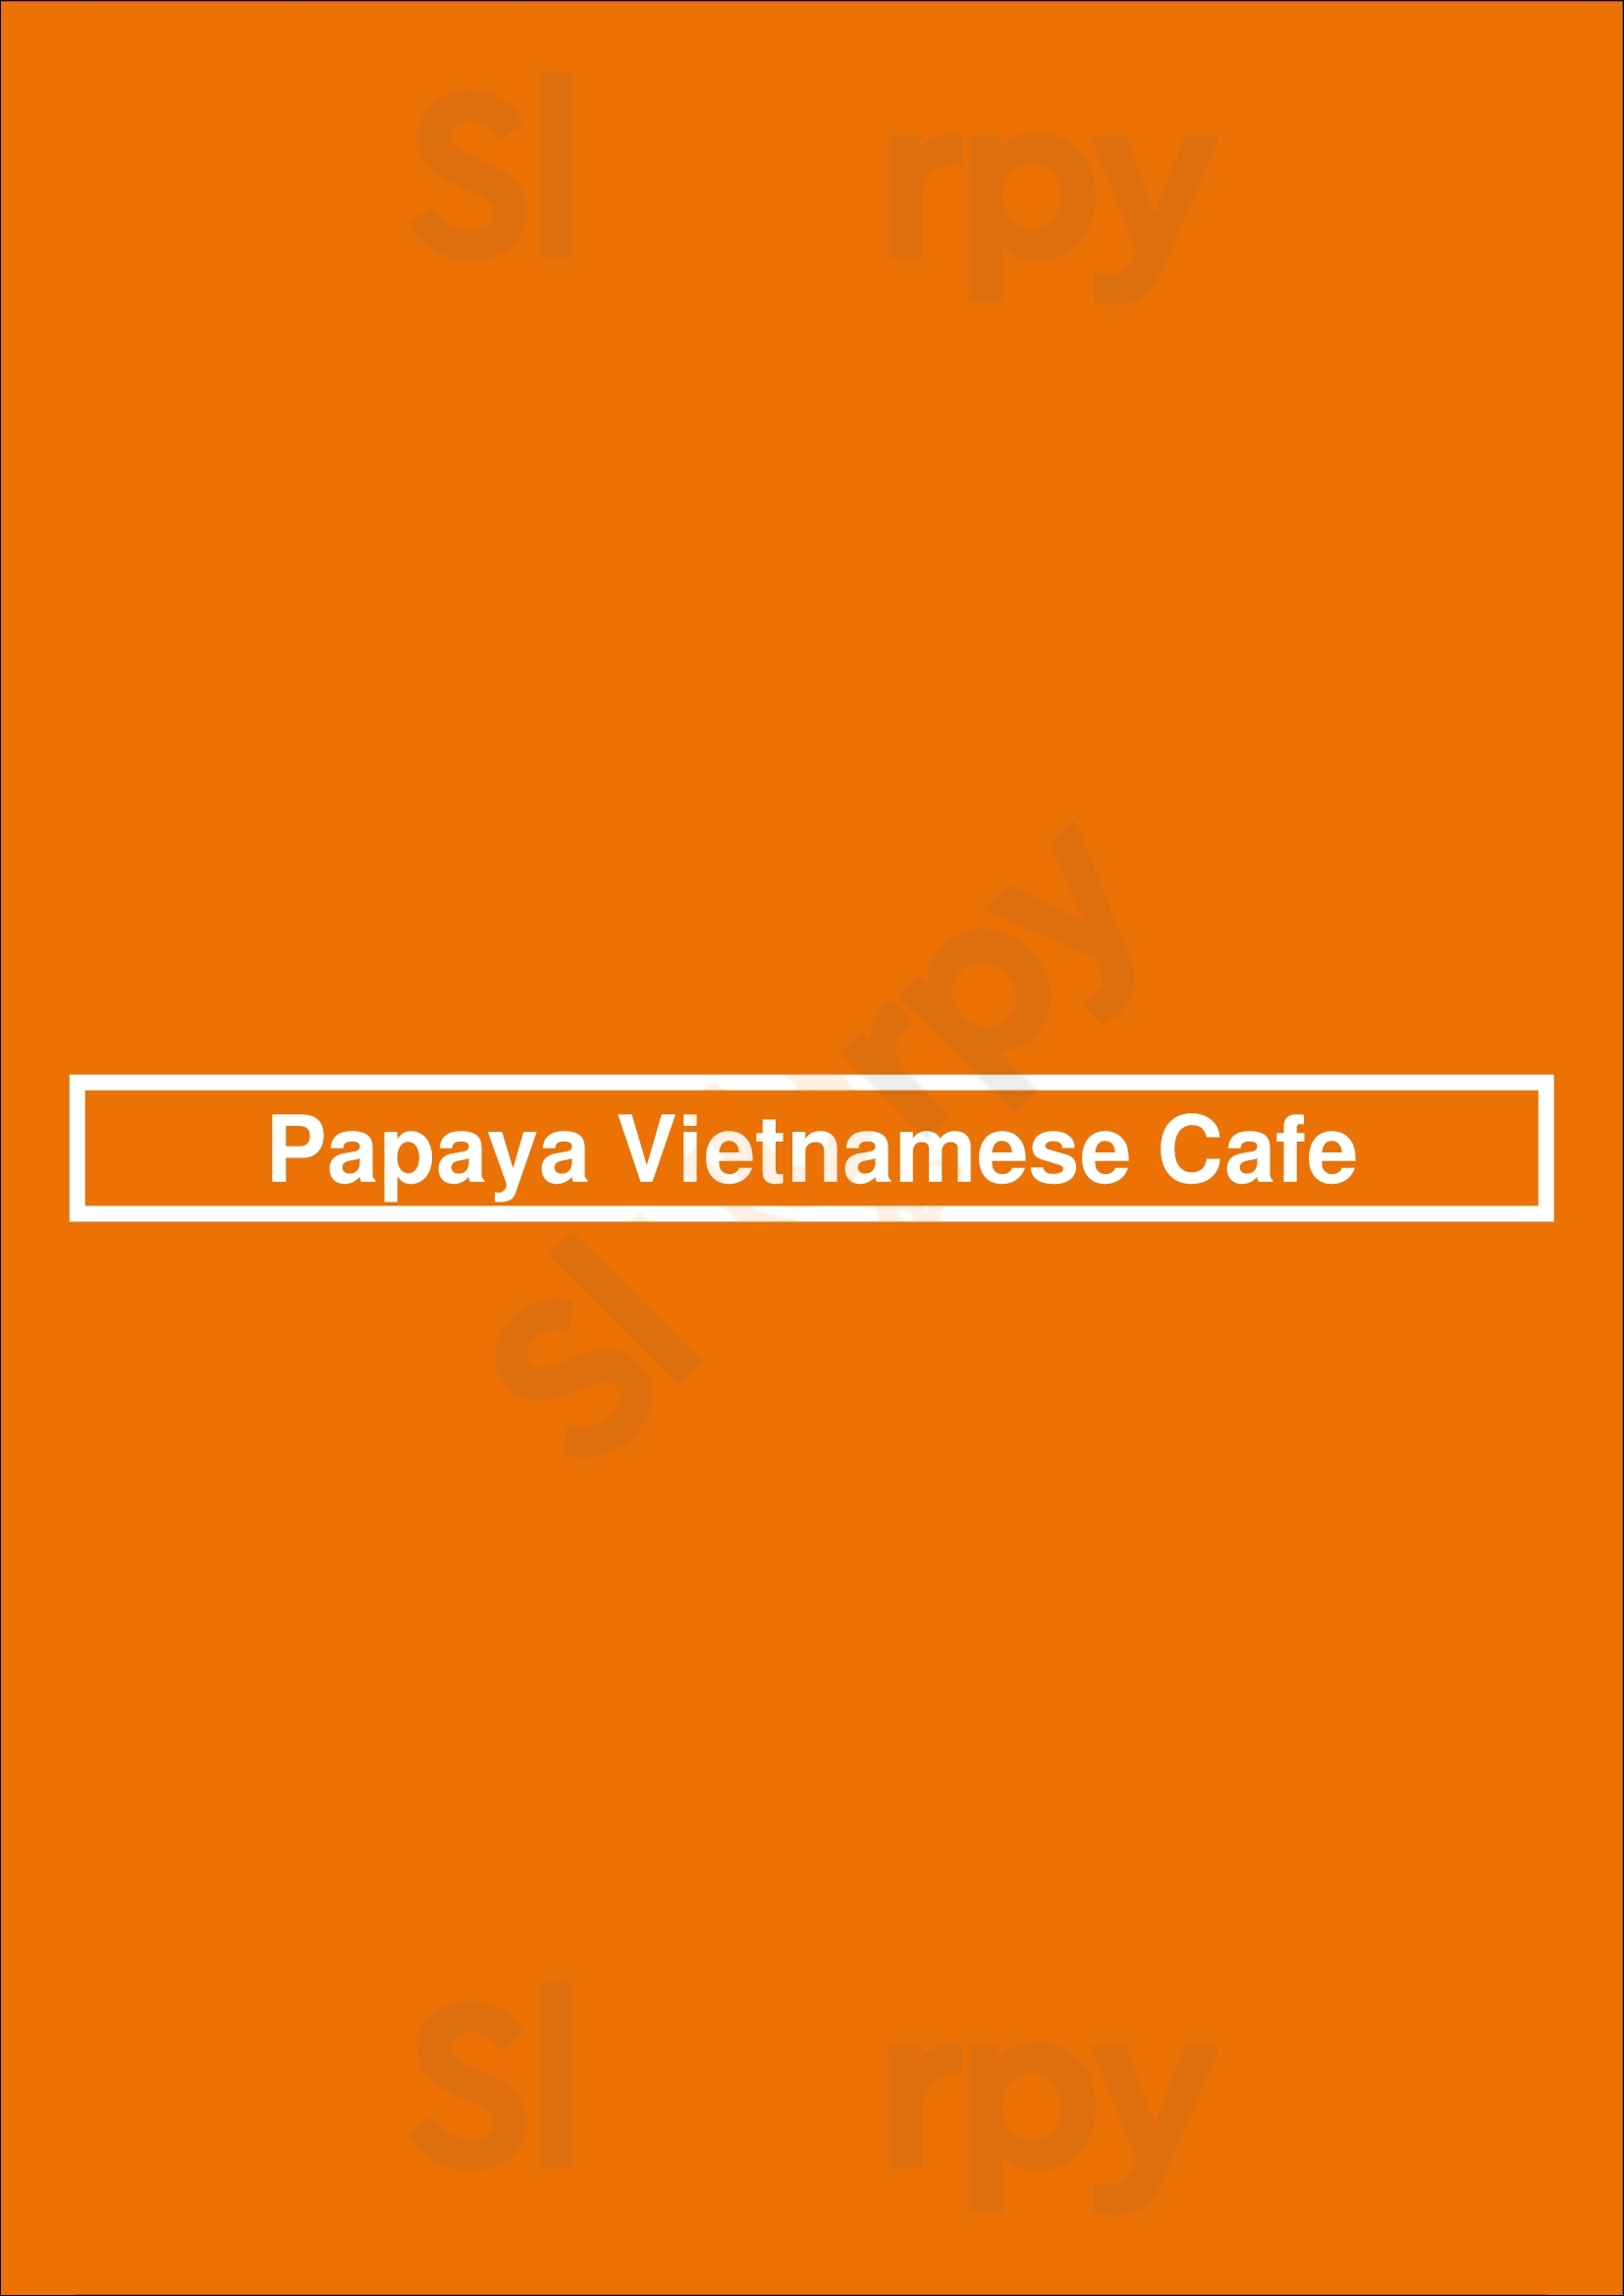 Papaya Vietnamese Cafe Renton Menu - 1